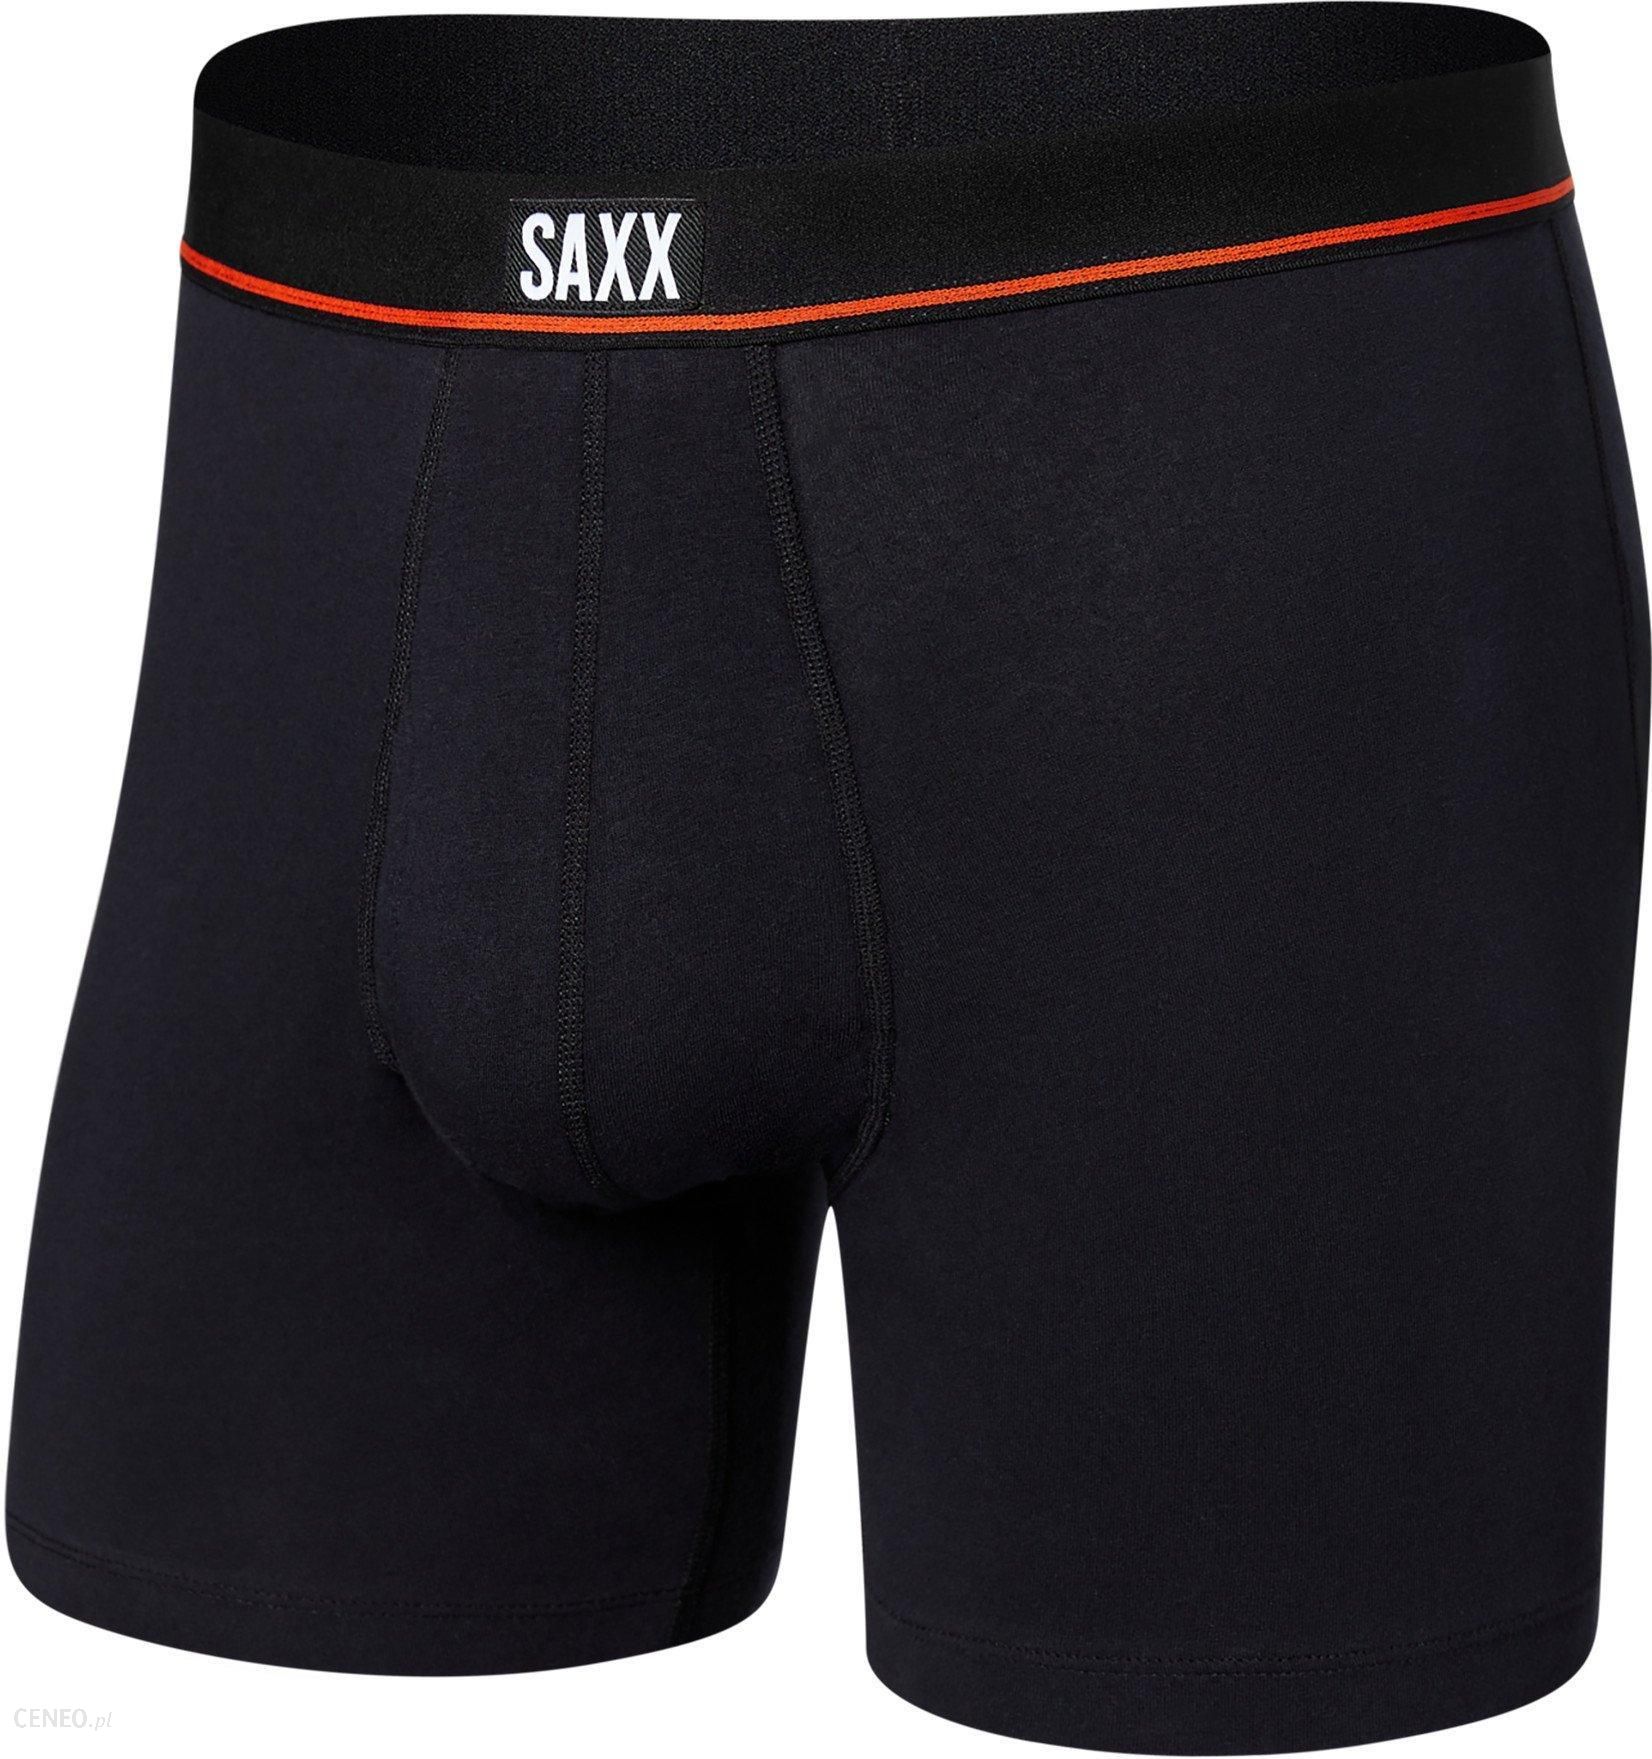 Saxx Non-Stop Stretch Cotton Boxer Brief Fly - Ceny i opinie - Ceneo.pl